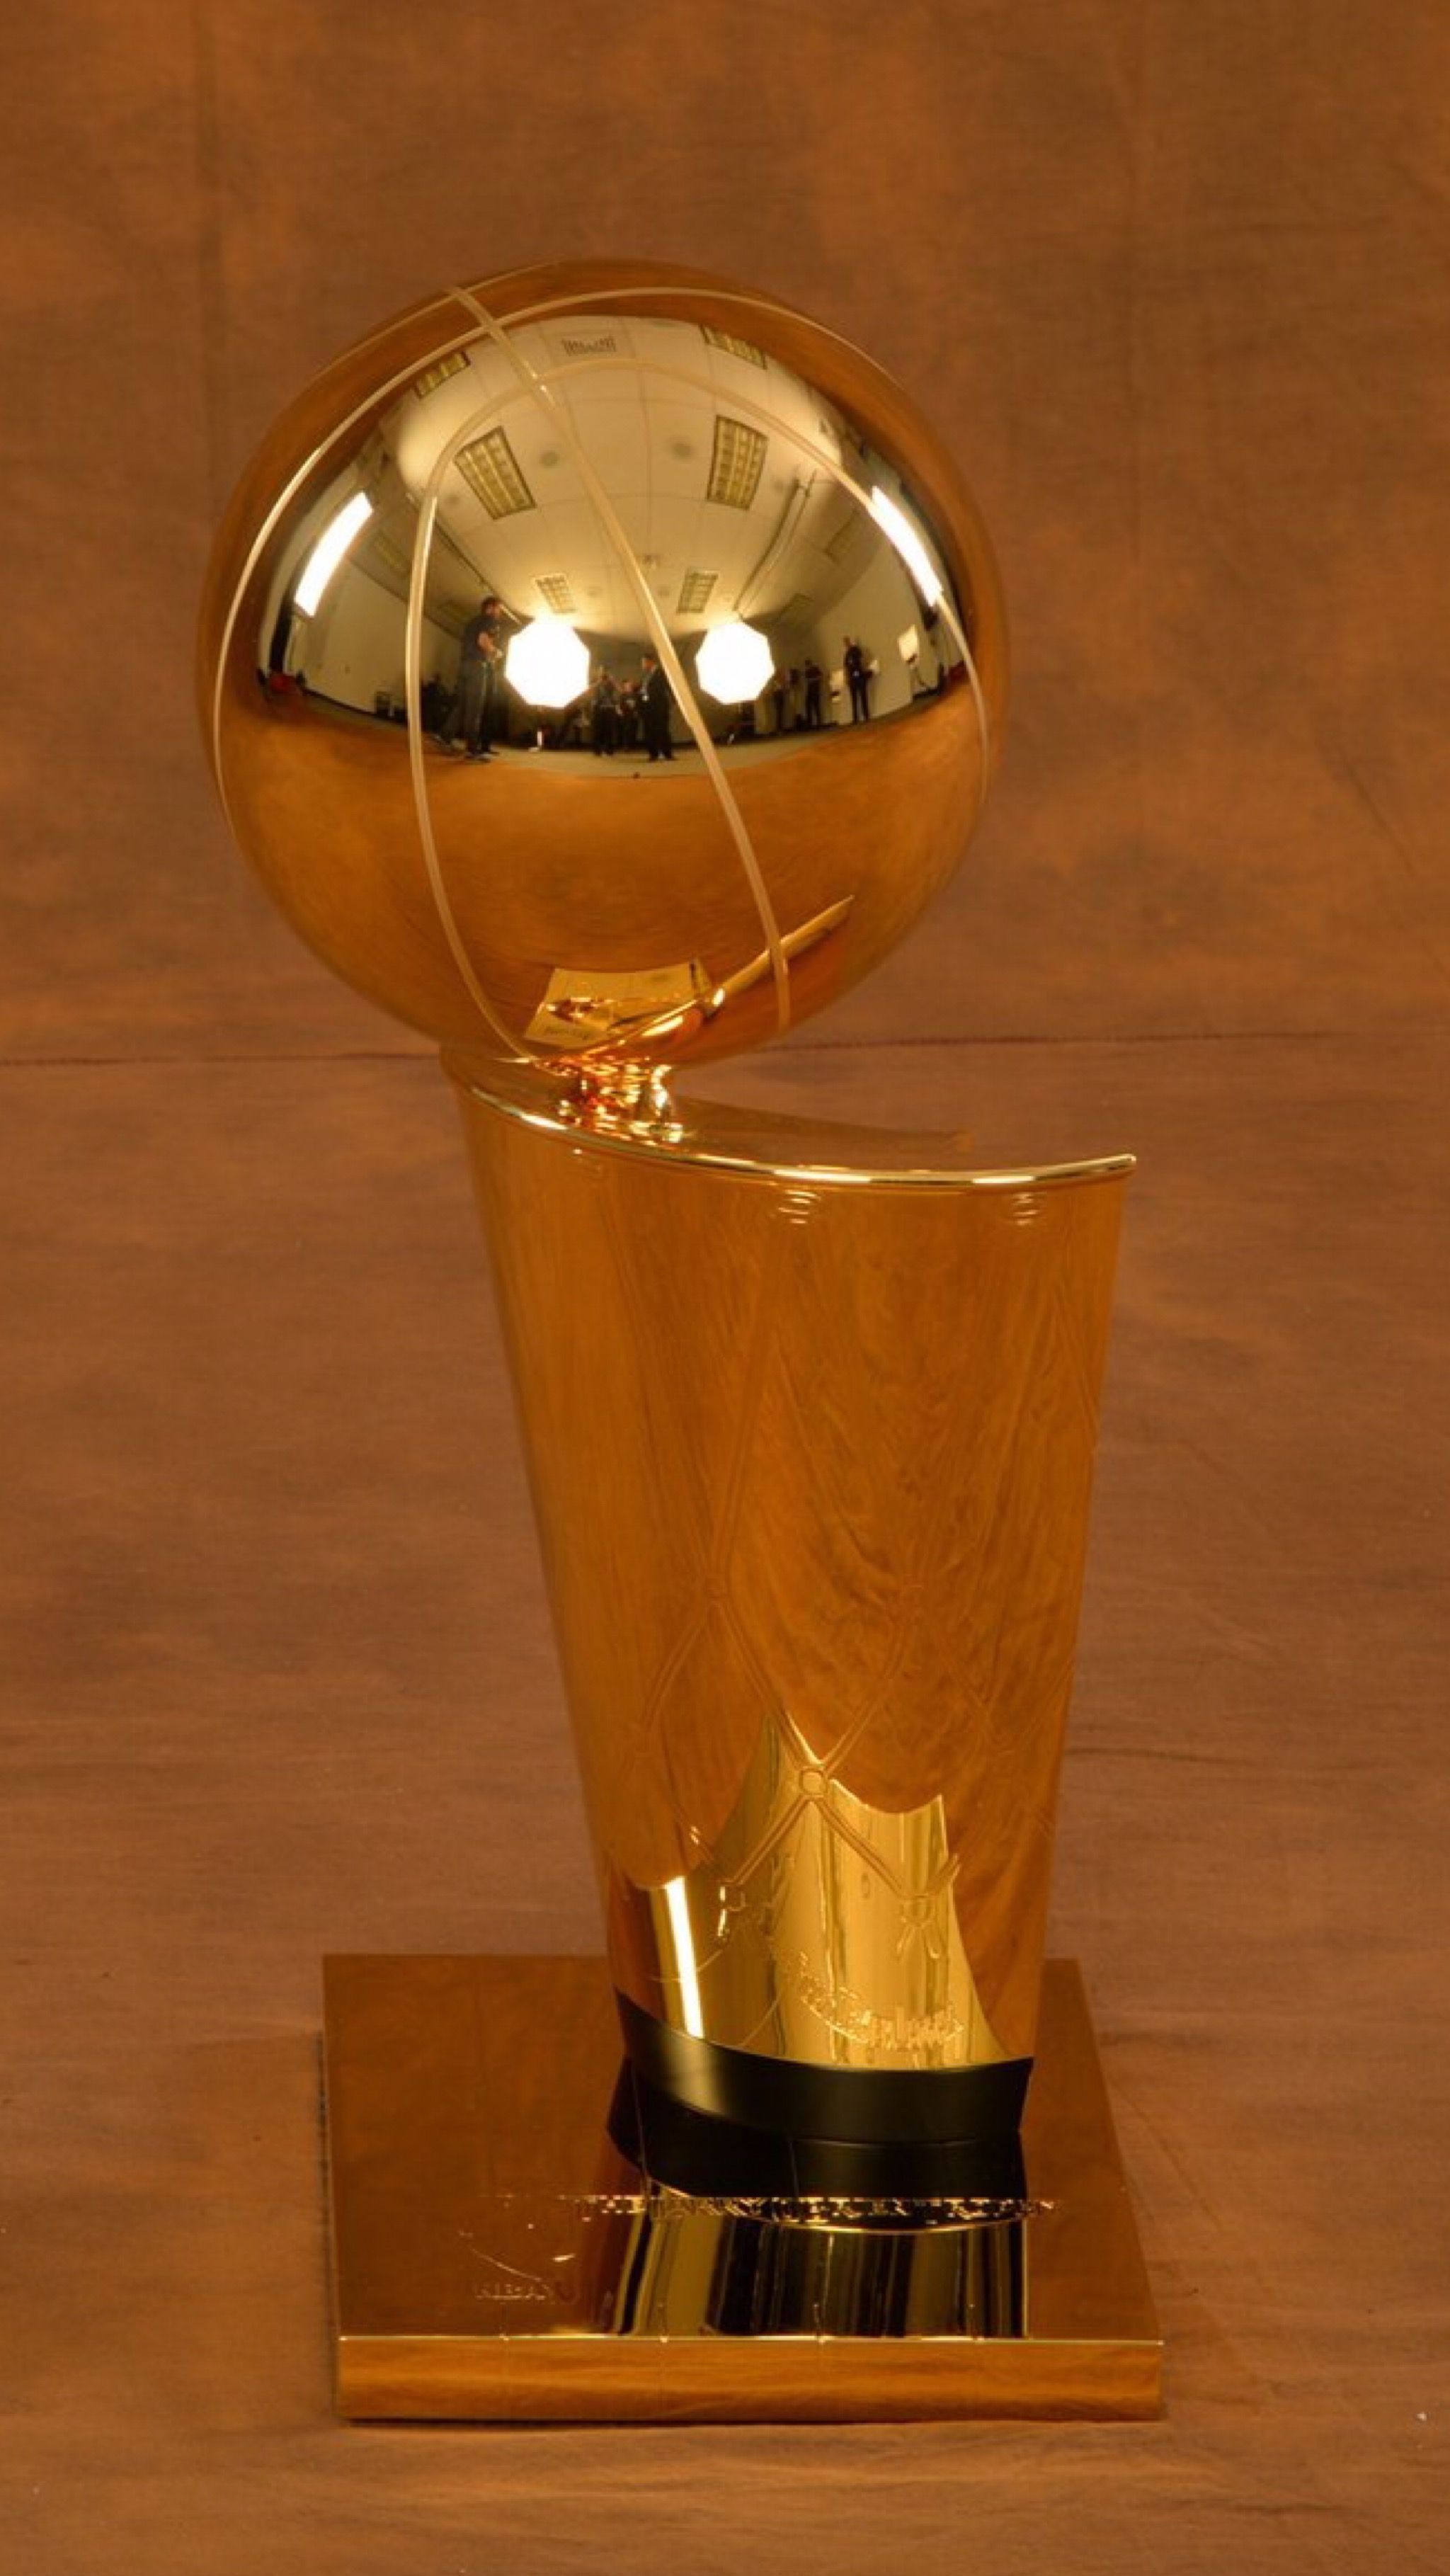 Larry O'Brien Championship Trophy. Nba wallpaper, Nba, Trophy